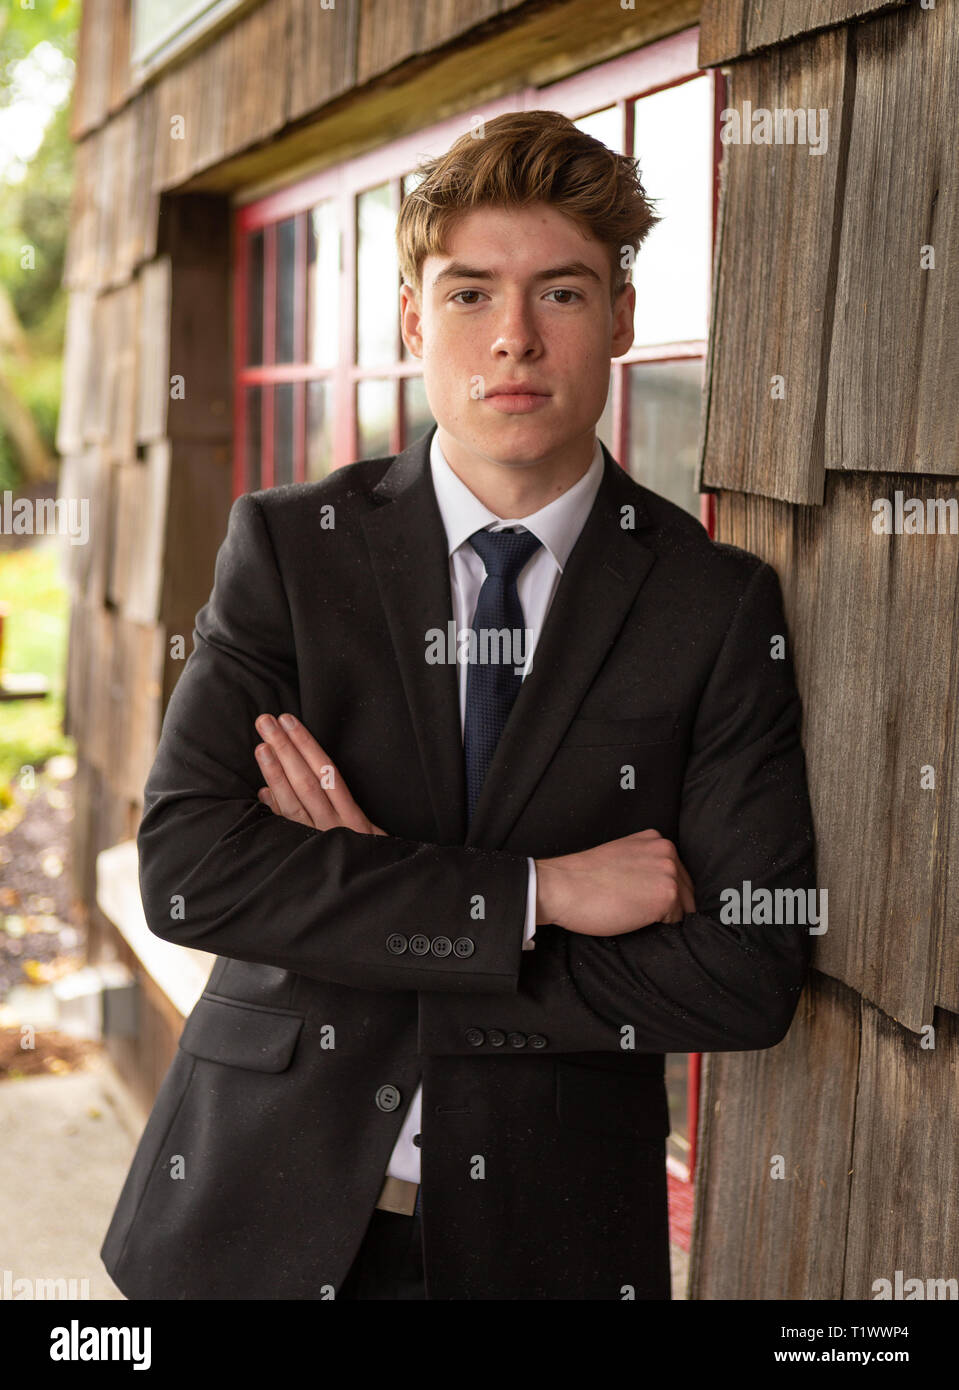 Teenage boy outside in suit Stock Photo - Alamy